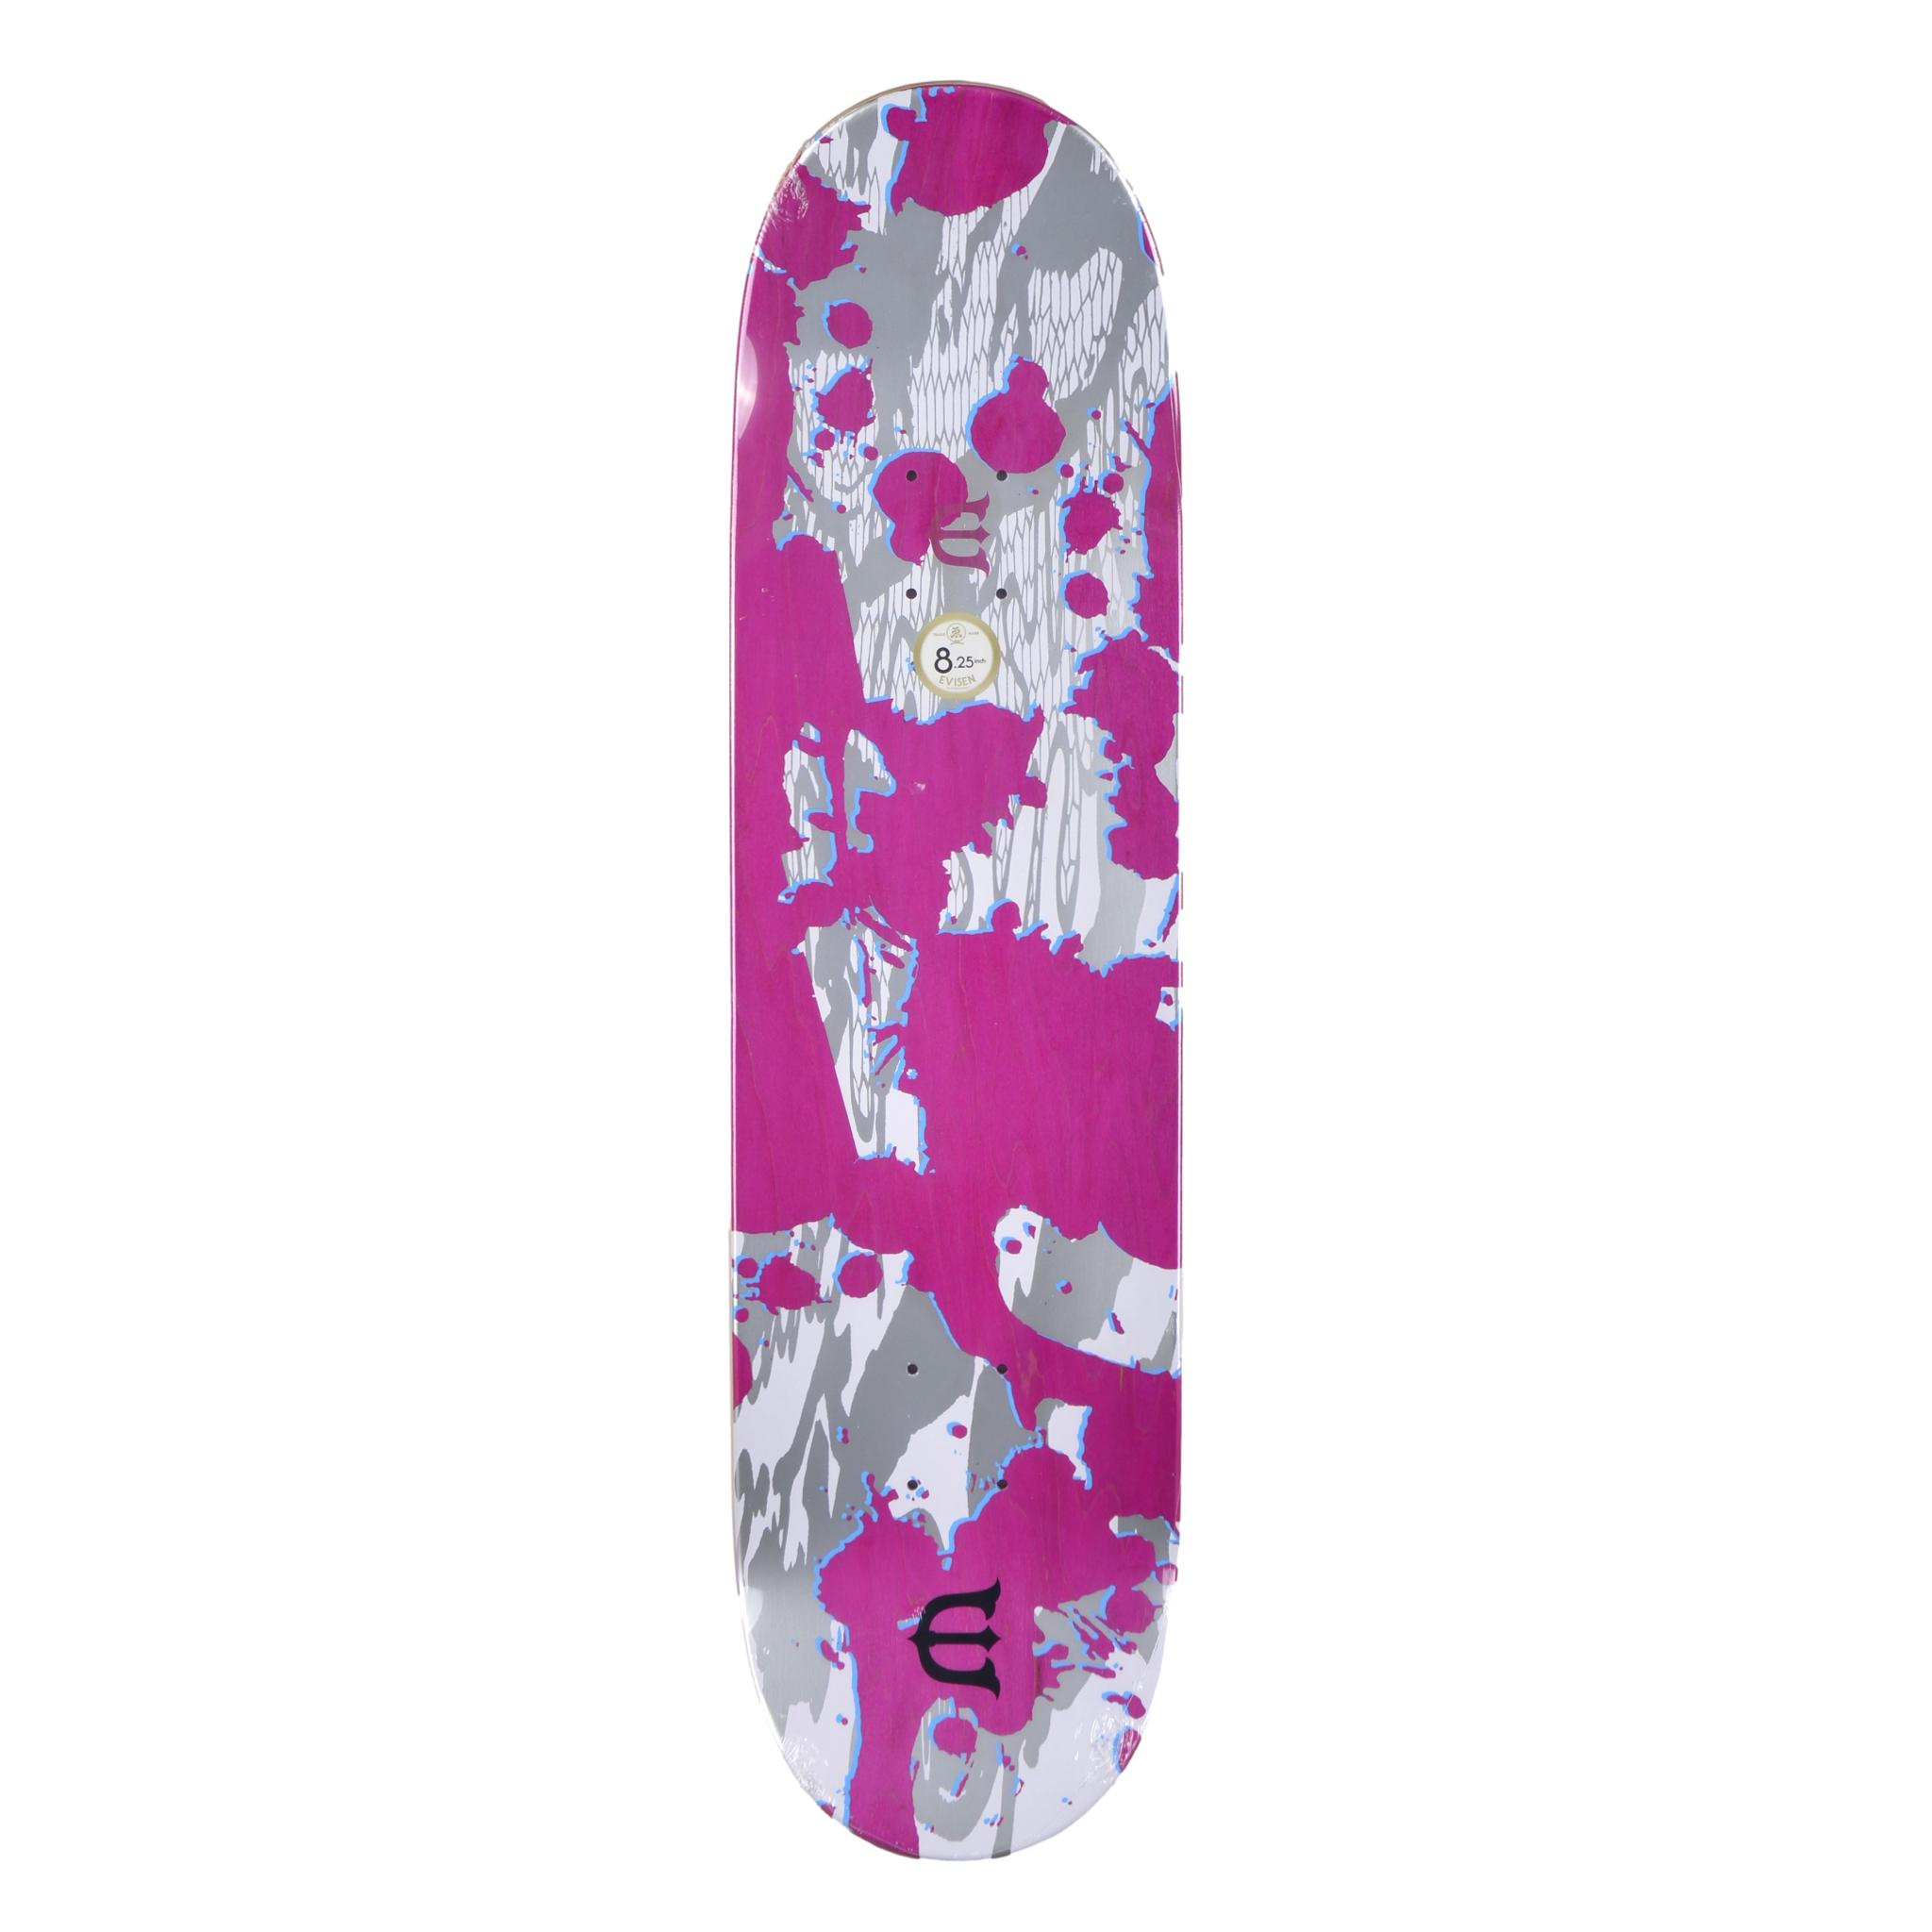 Evisen Skateboards Kento Hot Rats Deck 8.25